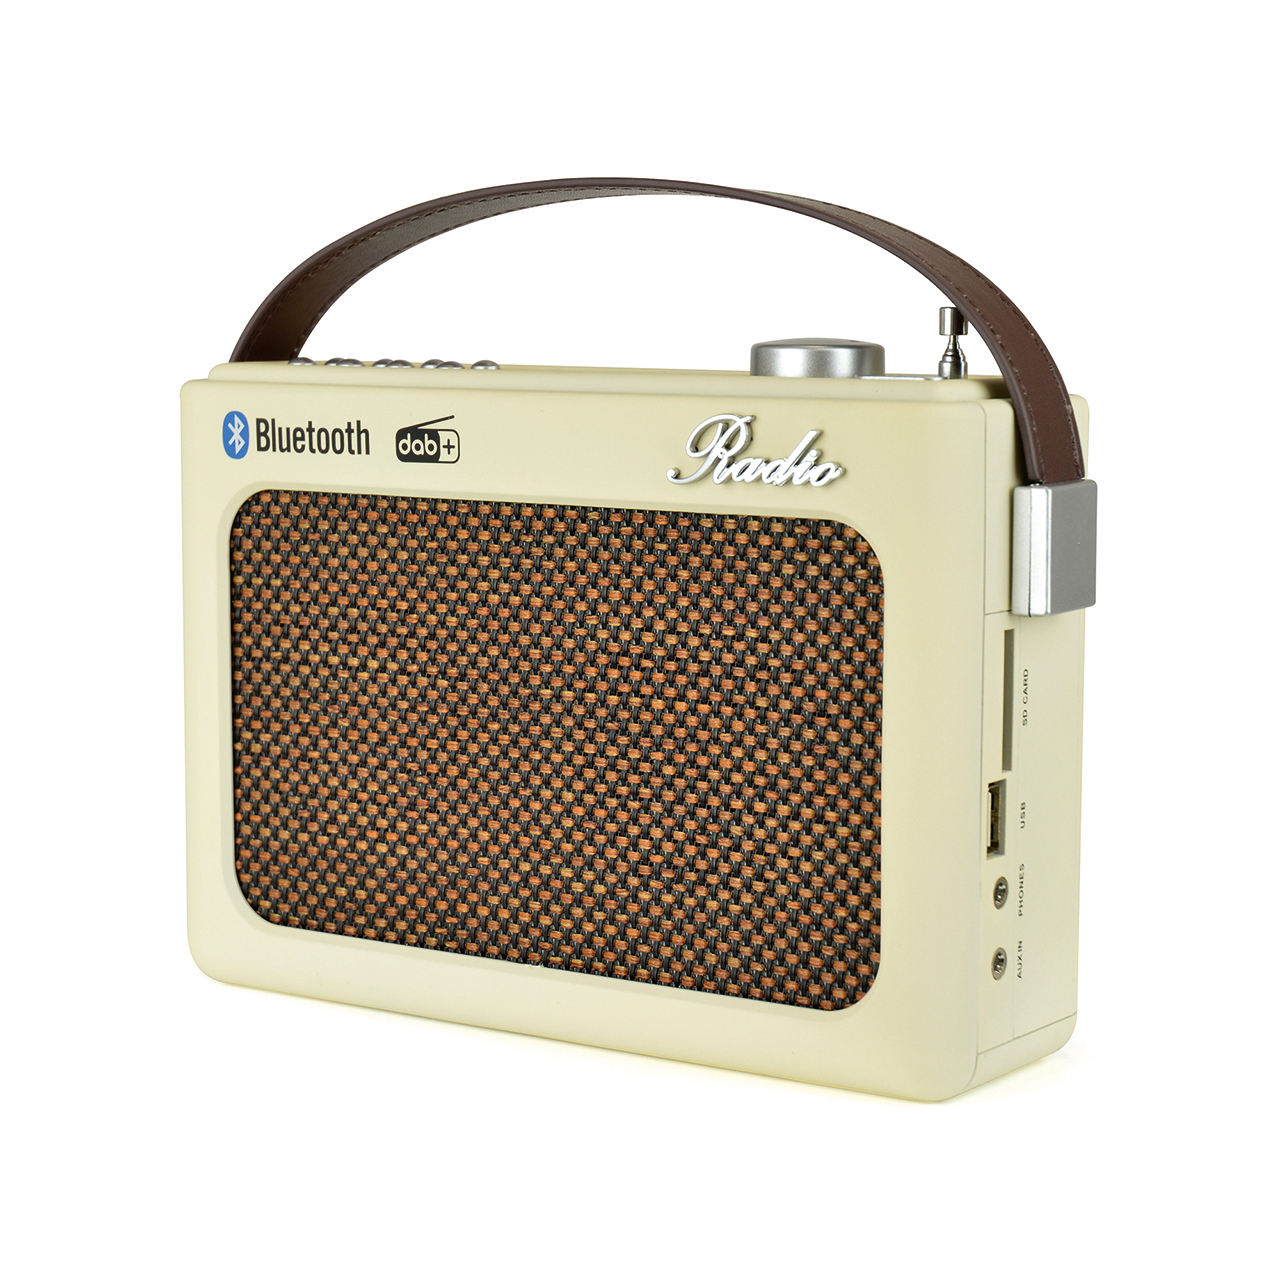 Lloytron Portable Stereo Radio with Bluetooth